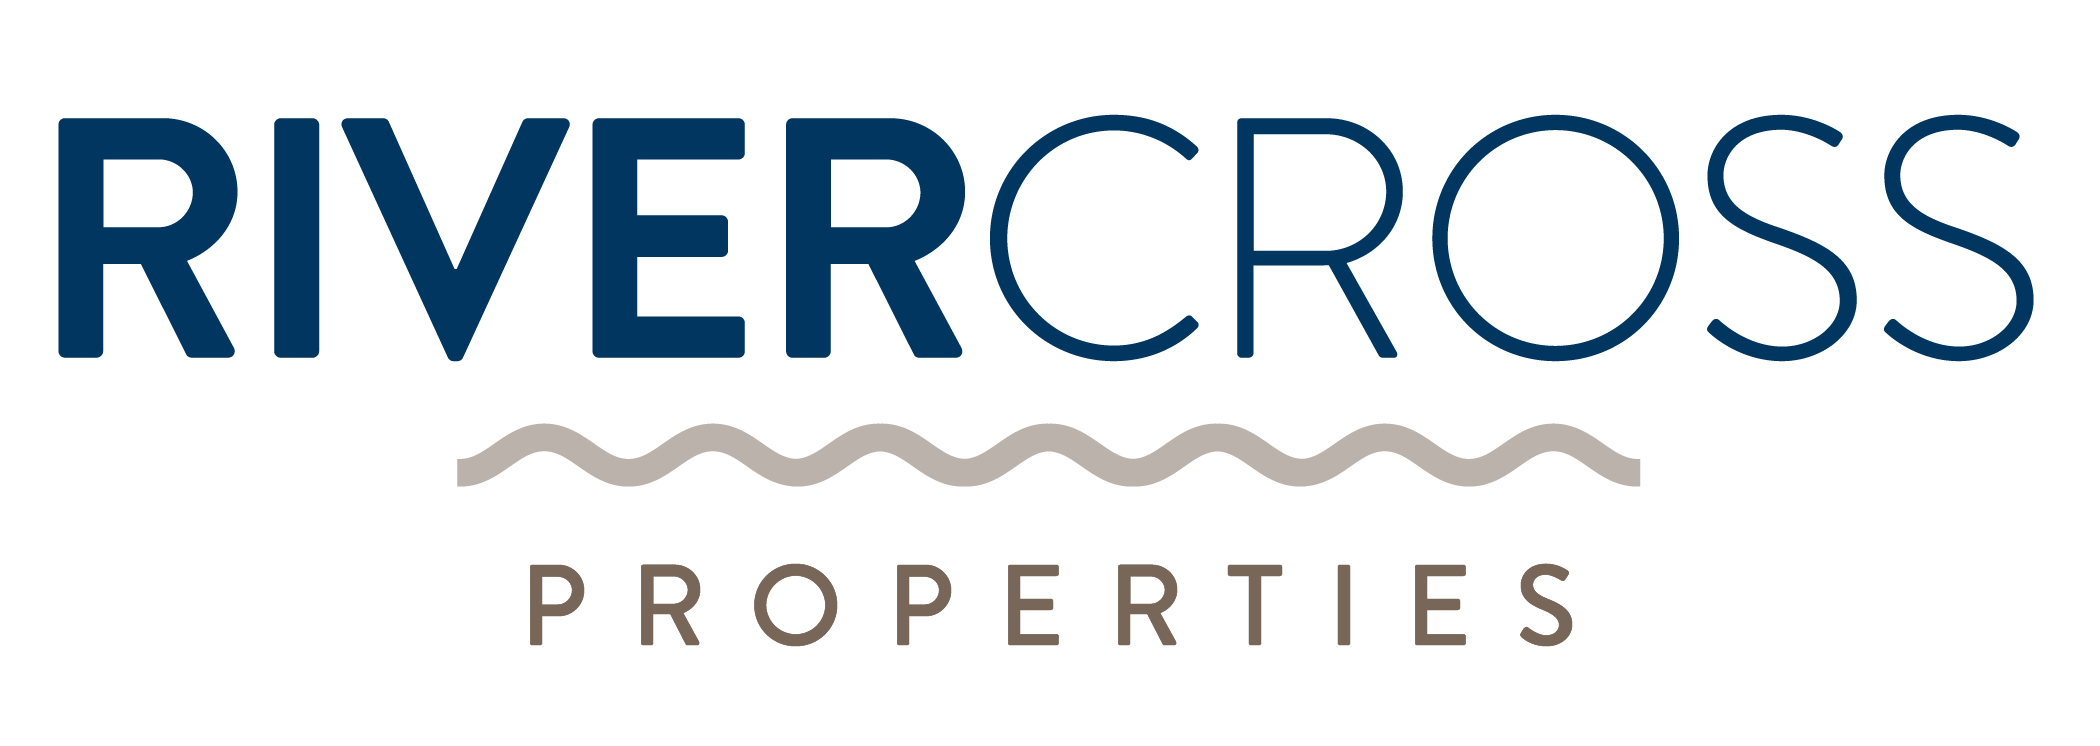 River Cross Properties Logo